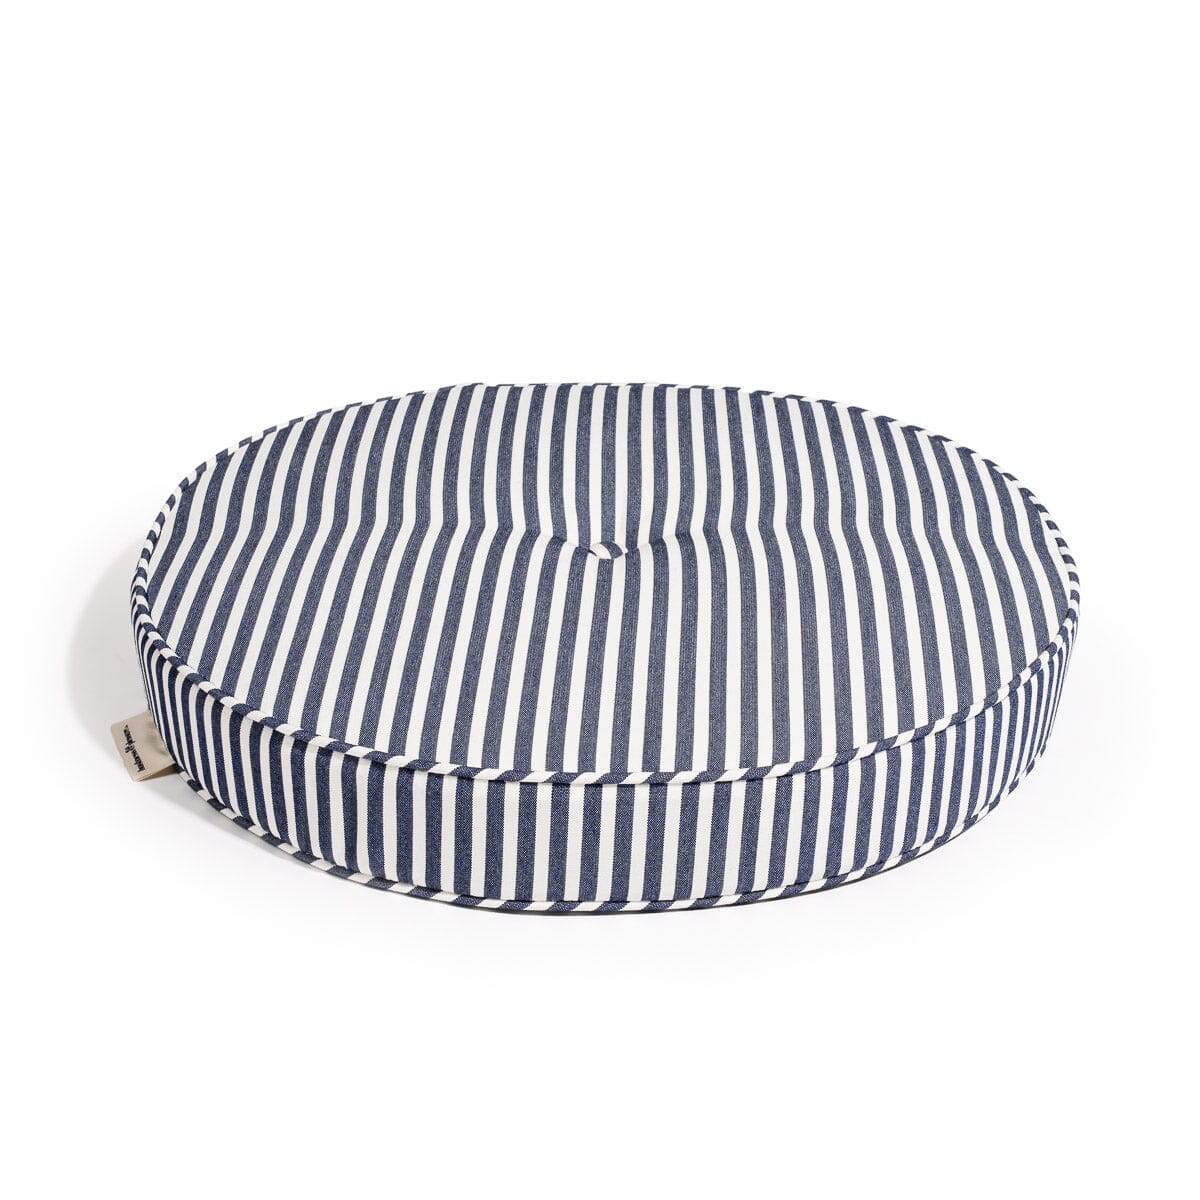 The Circular Pillow - Laurens Navy Stripe Circular Pillow Business & Pleasure Co Aus 